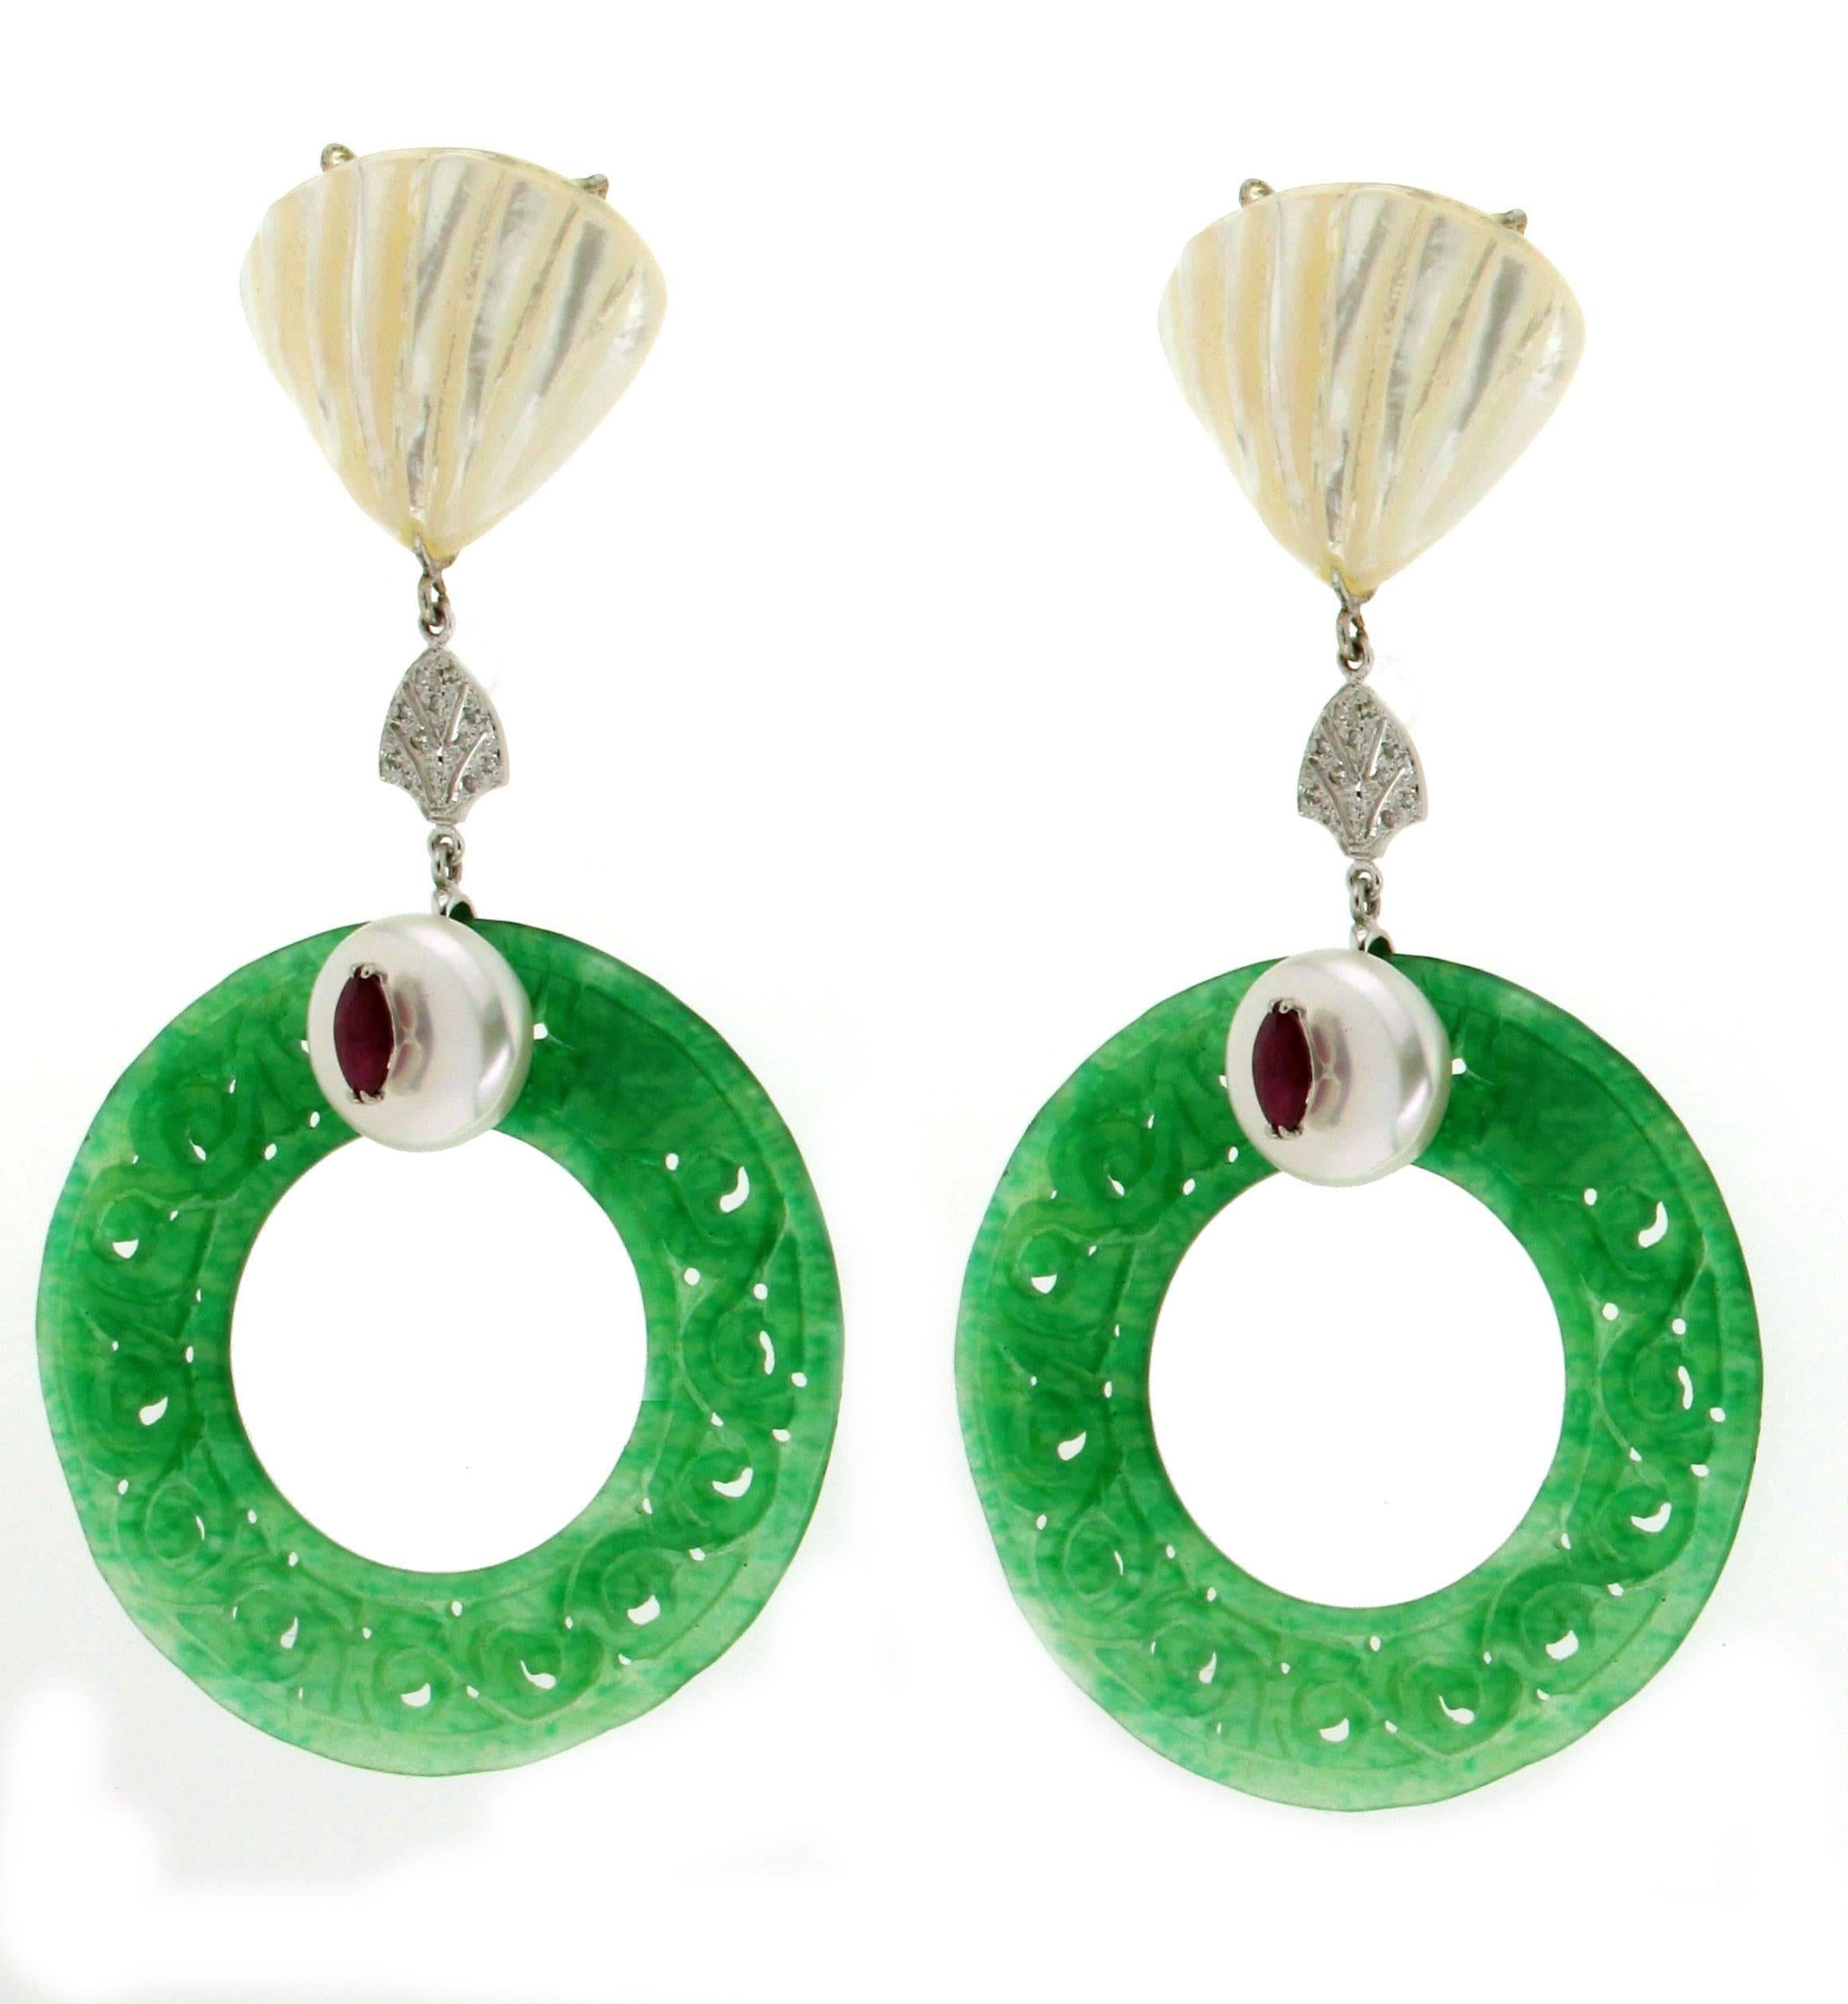 Jadeite jade and nacre white gold 18 carat little diamonds and shuttles rubies drop earrings

Earrings weight 25.30 grams 